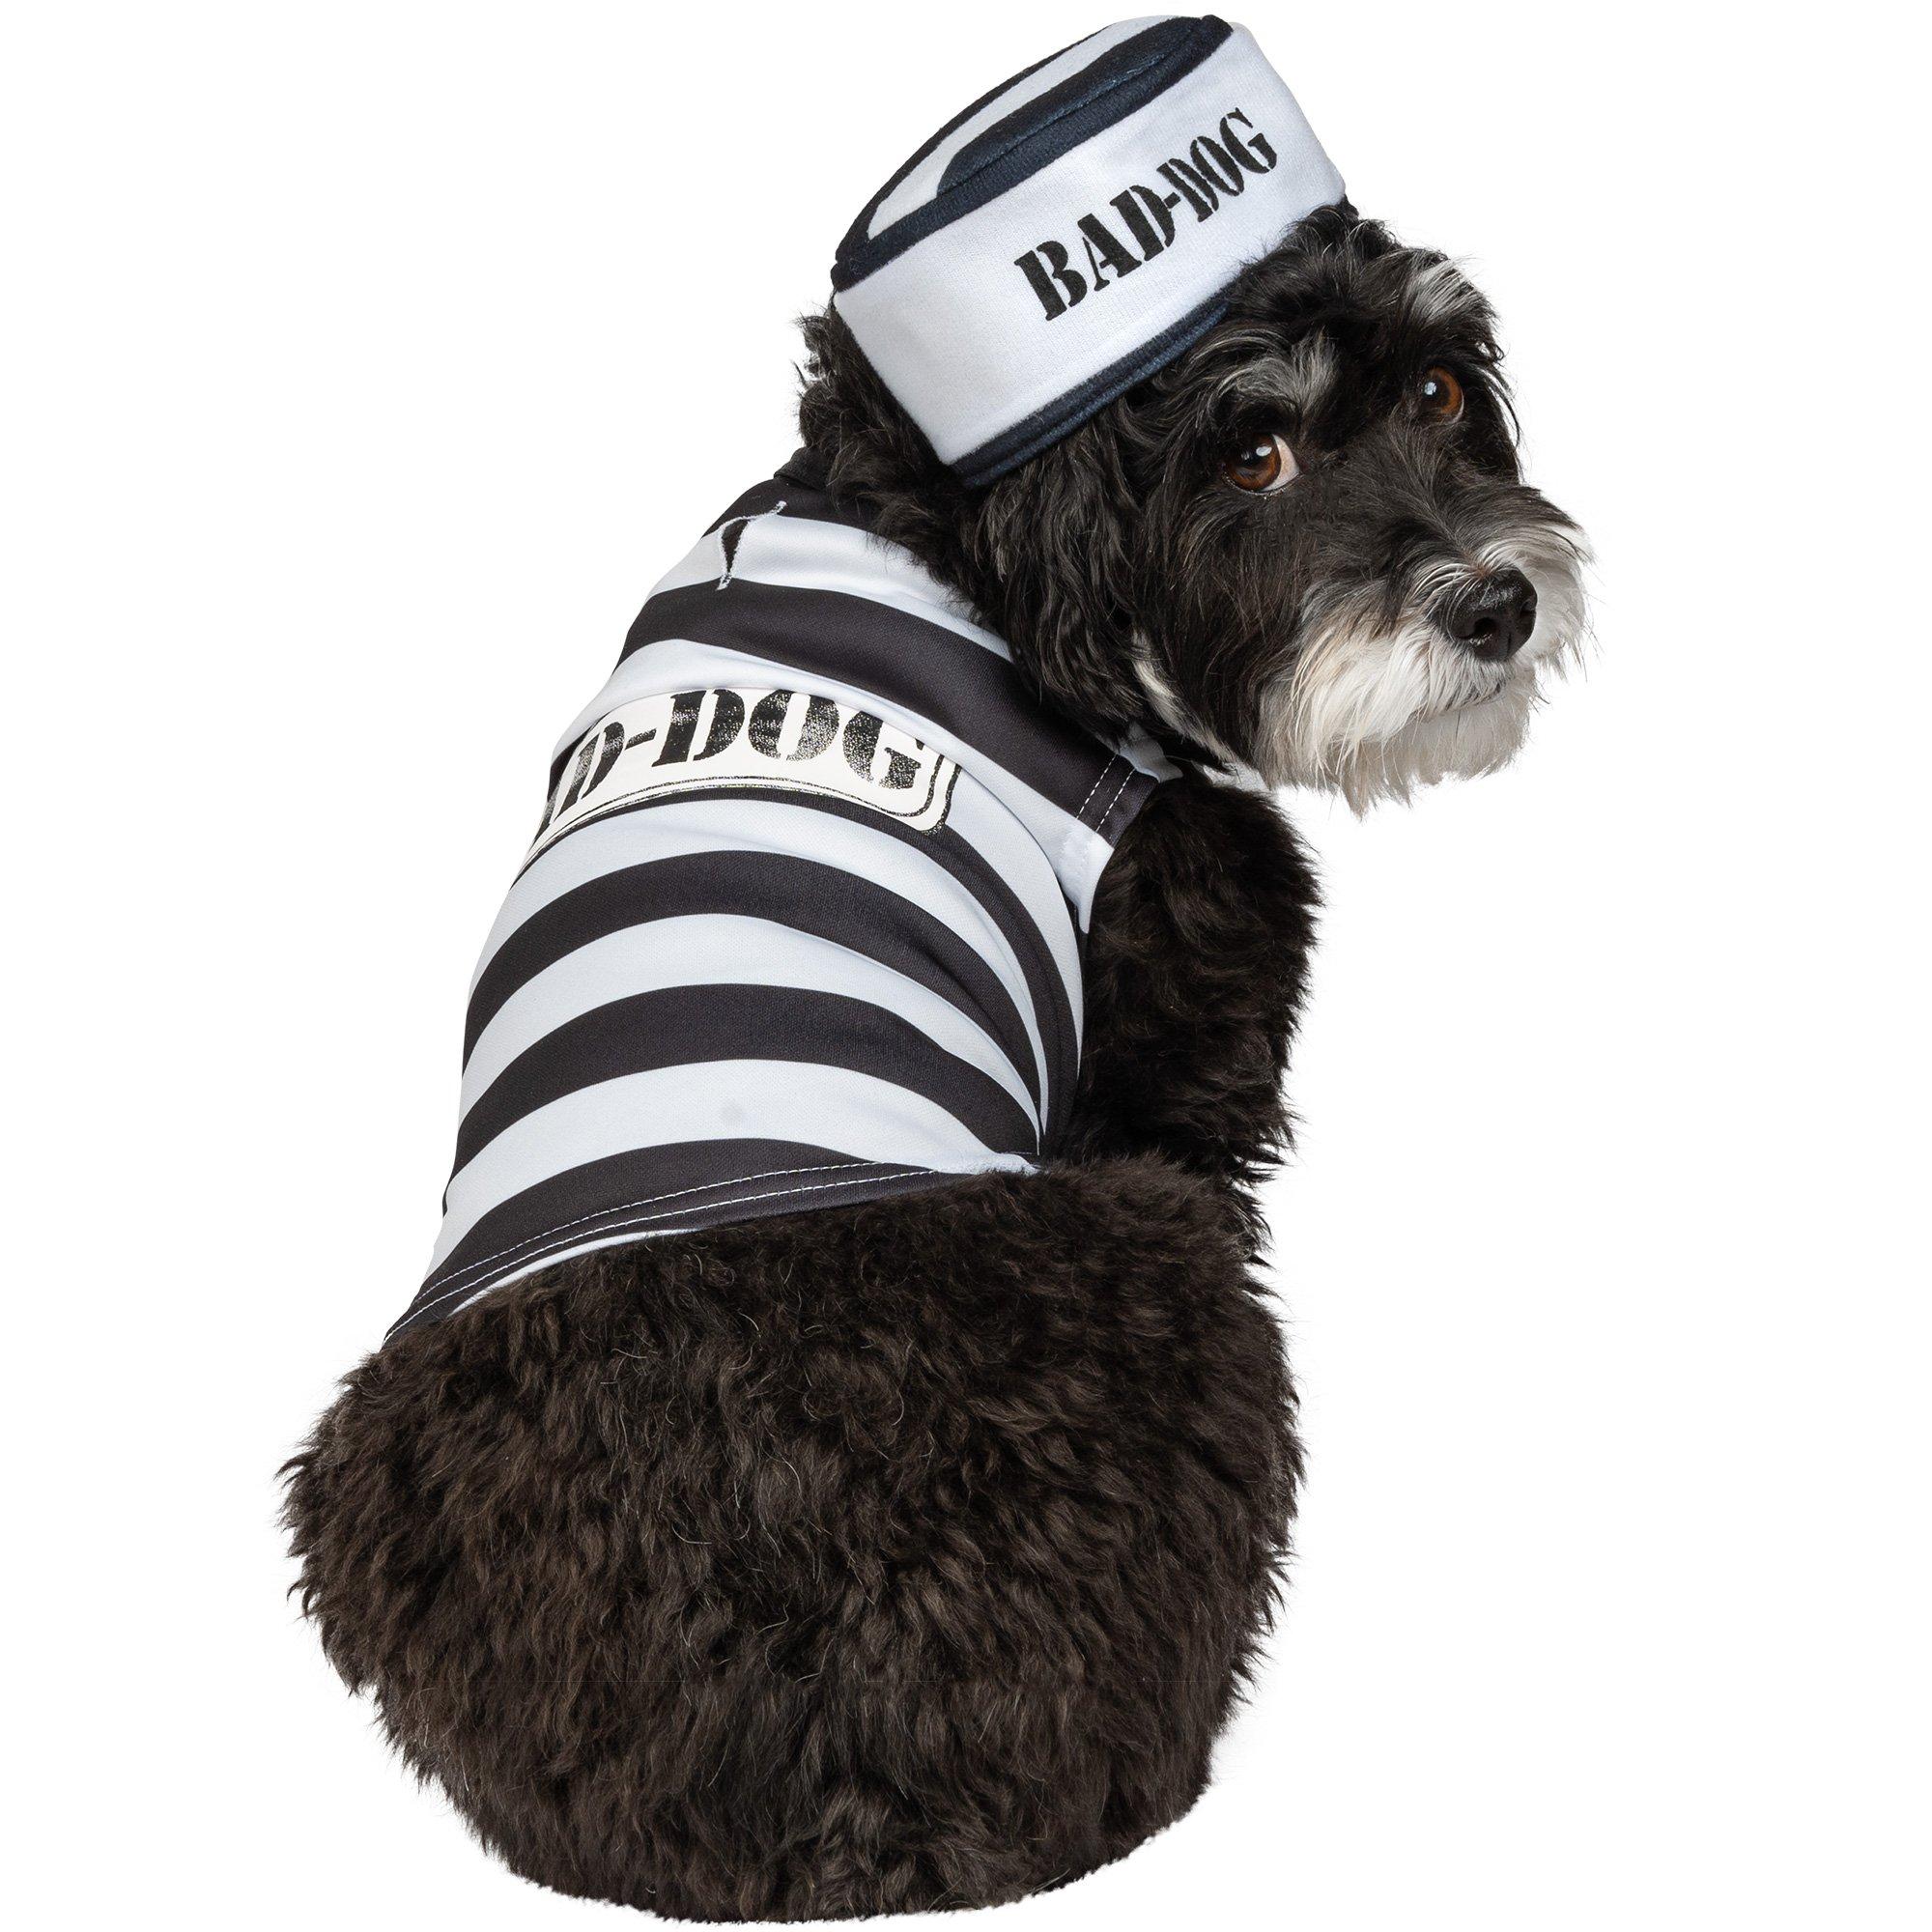 Basketball Costumes Dogs, Dog Basketball Jersey, Large Summer Dog Vest